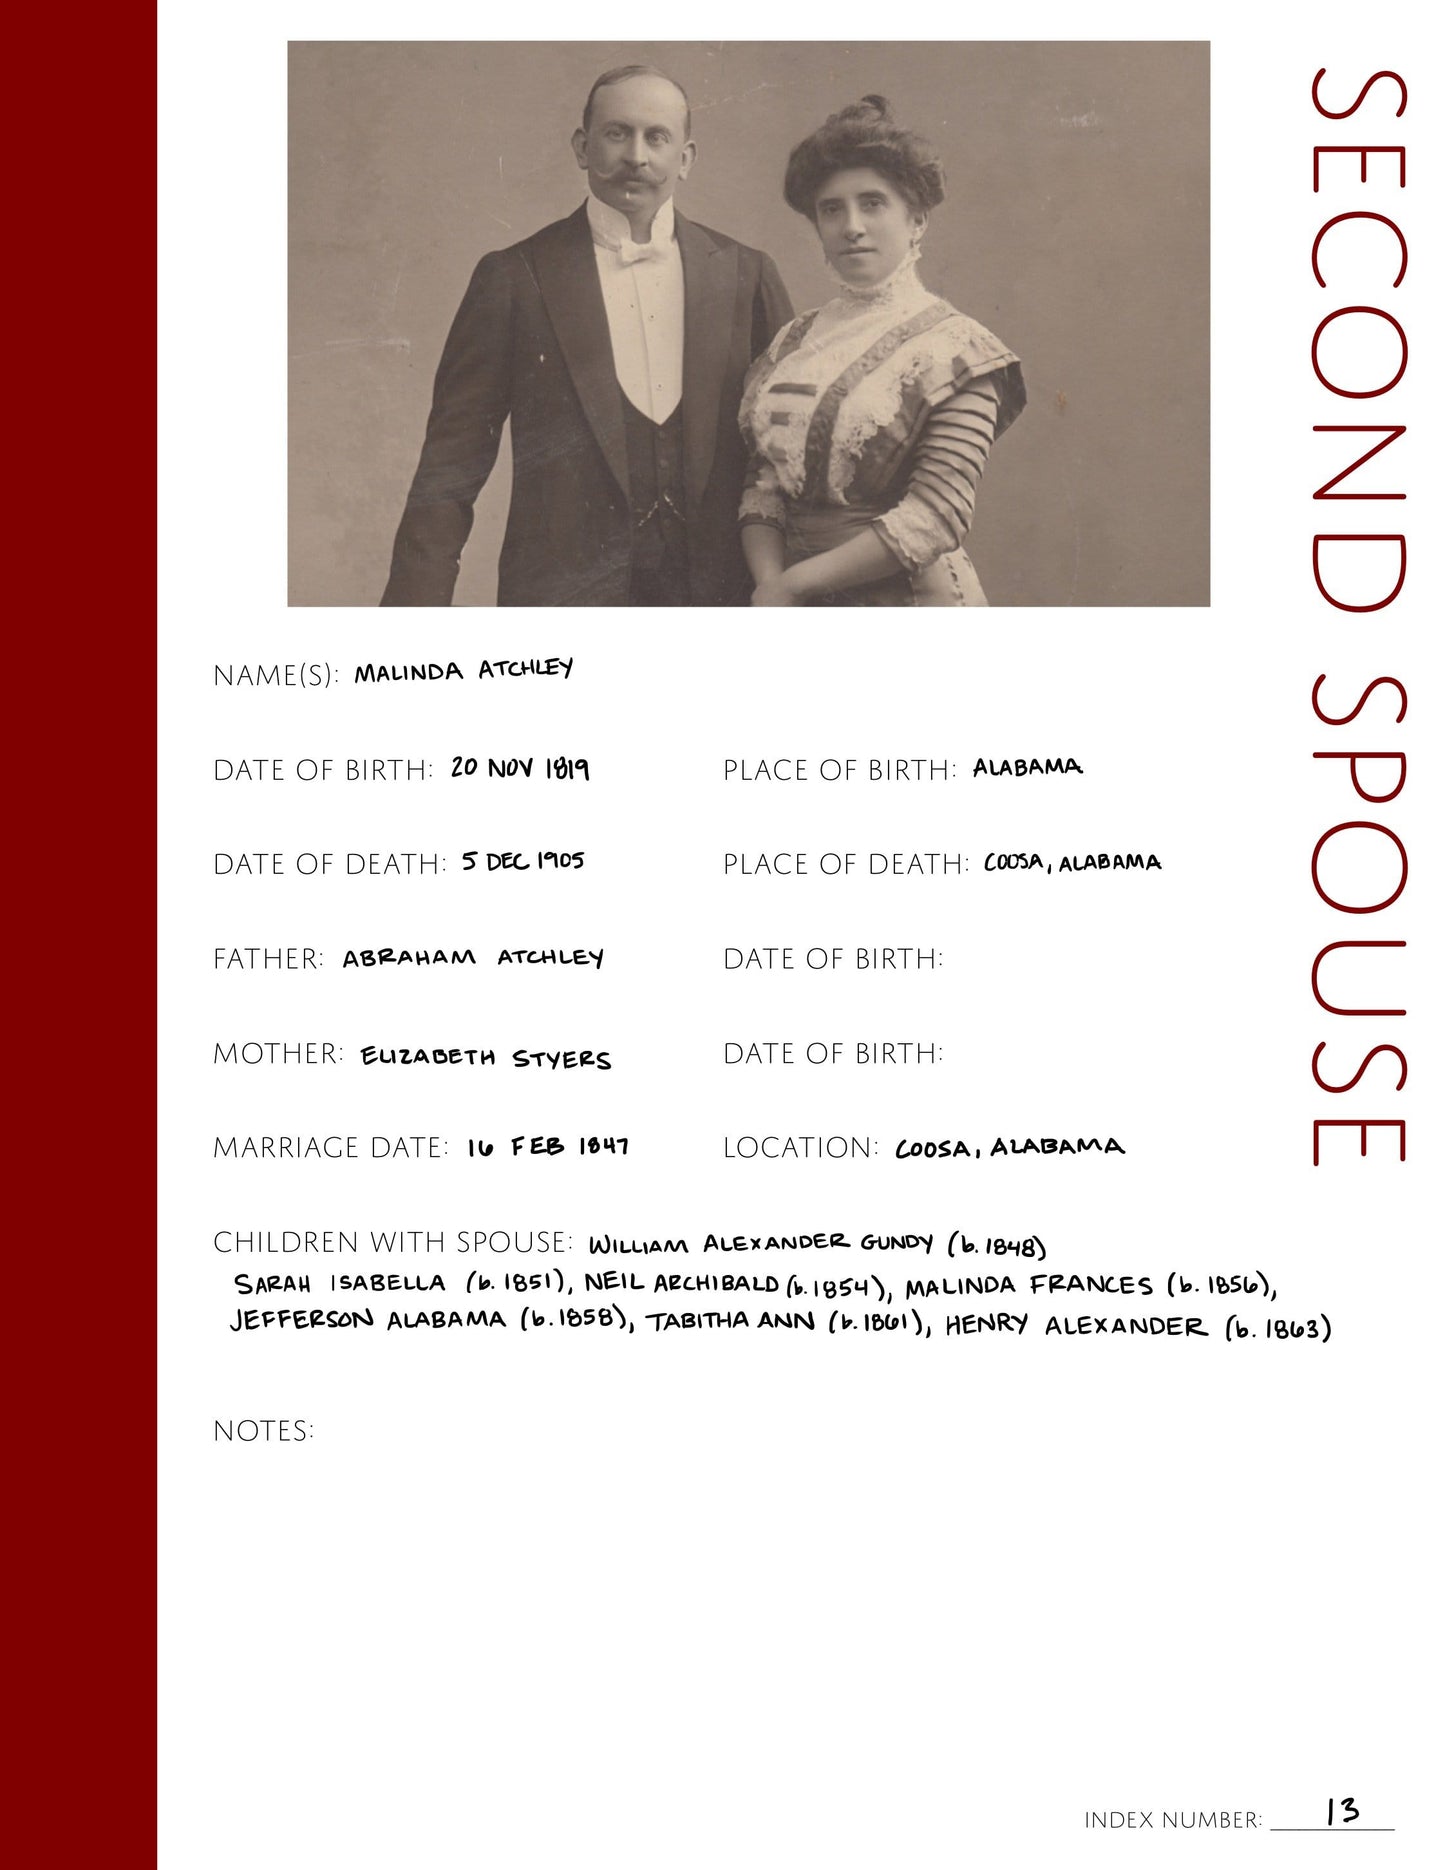 Second Spouse Profile Page: Printable Genealogy Form (Digital Download)